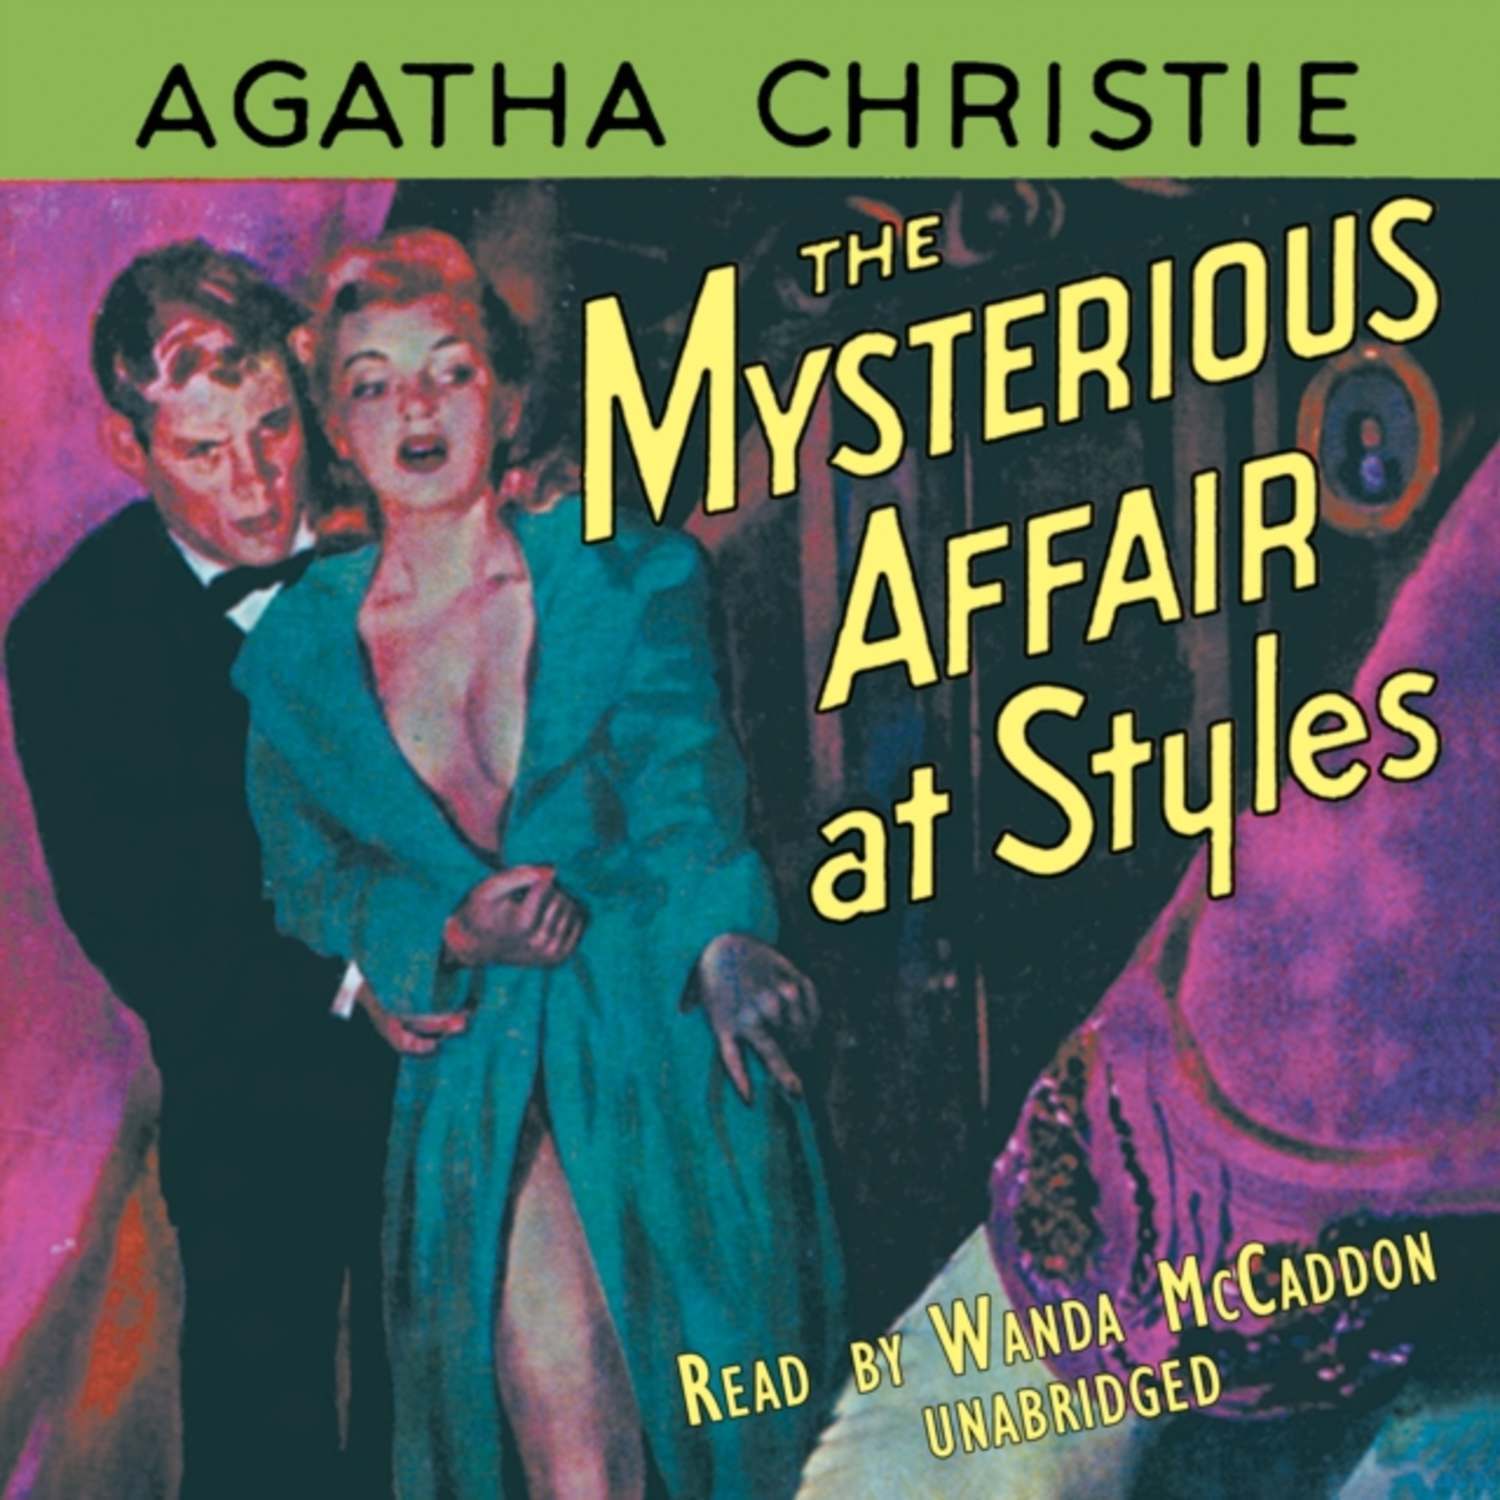 Аудиокнига кристи книги слушать. The mysterious Affair at Styles by Agatha Christie.